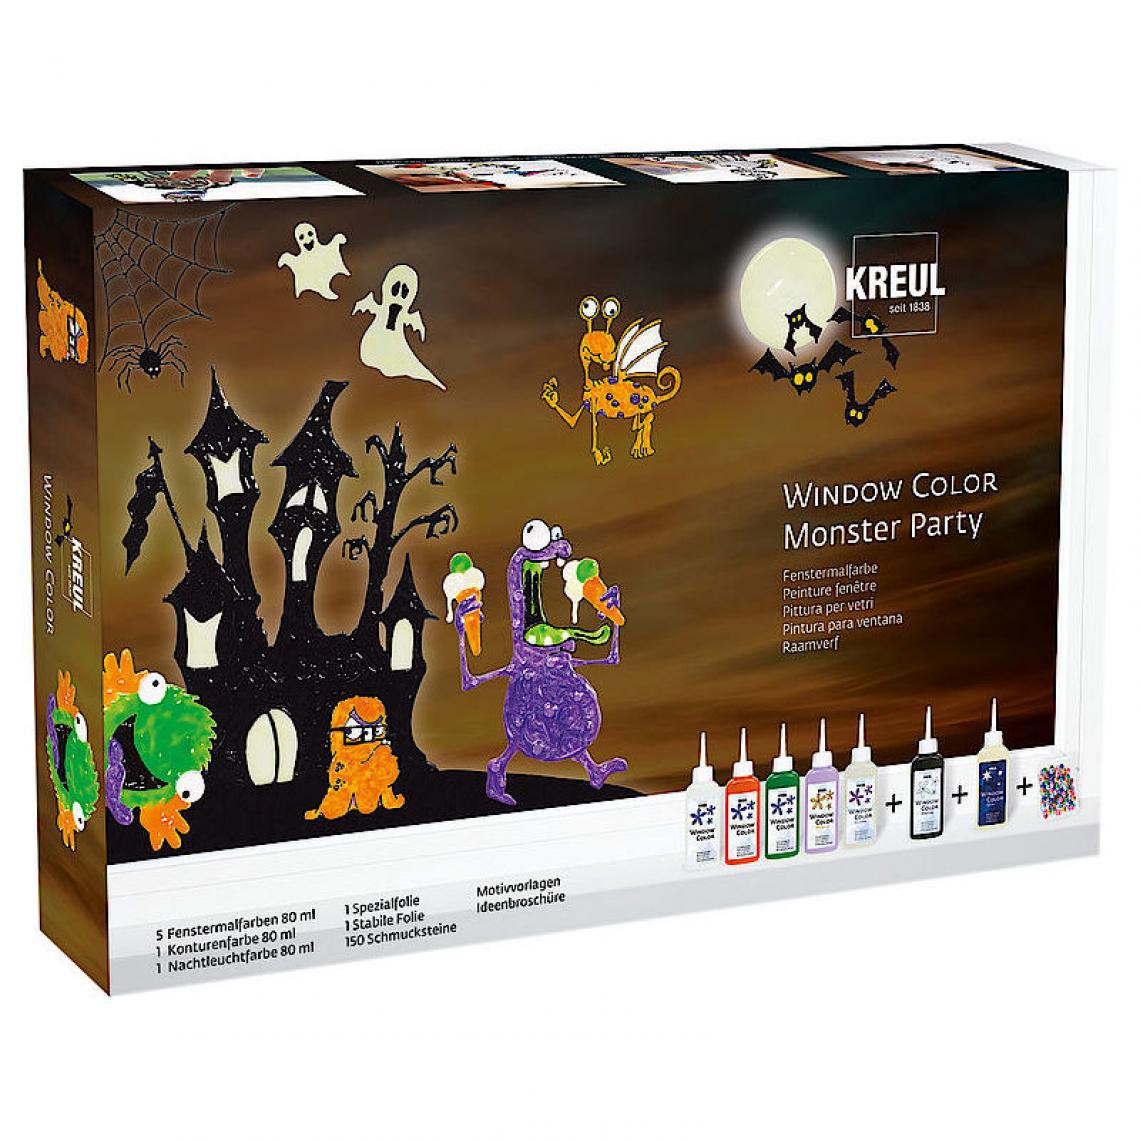 Kreul - KREUL Window Color 'Monster Party', kit () - Bricolage et jardinage